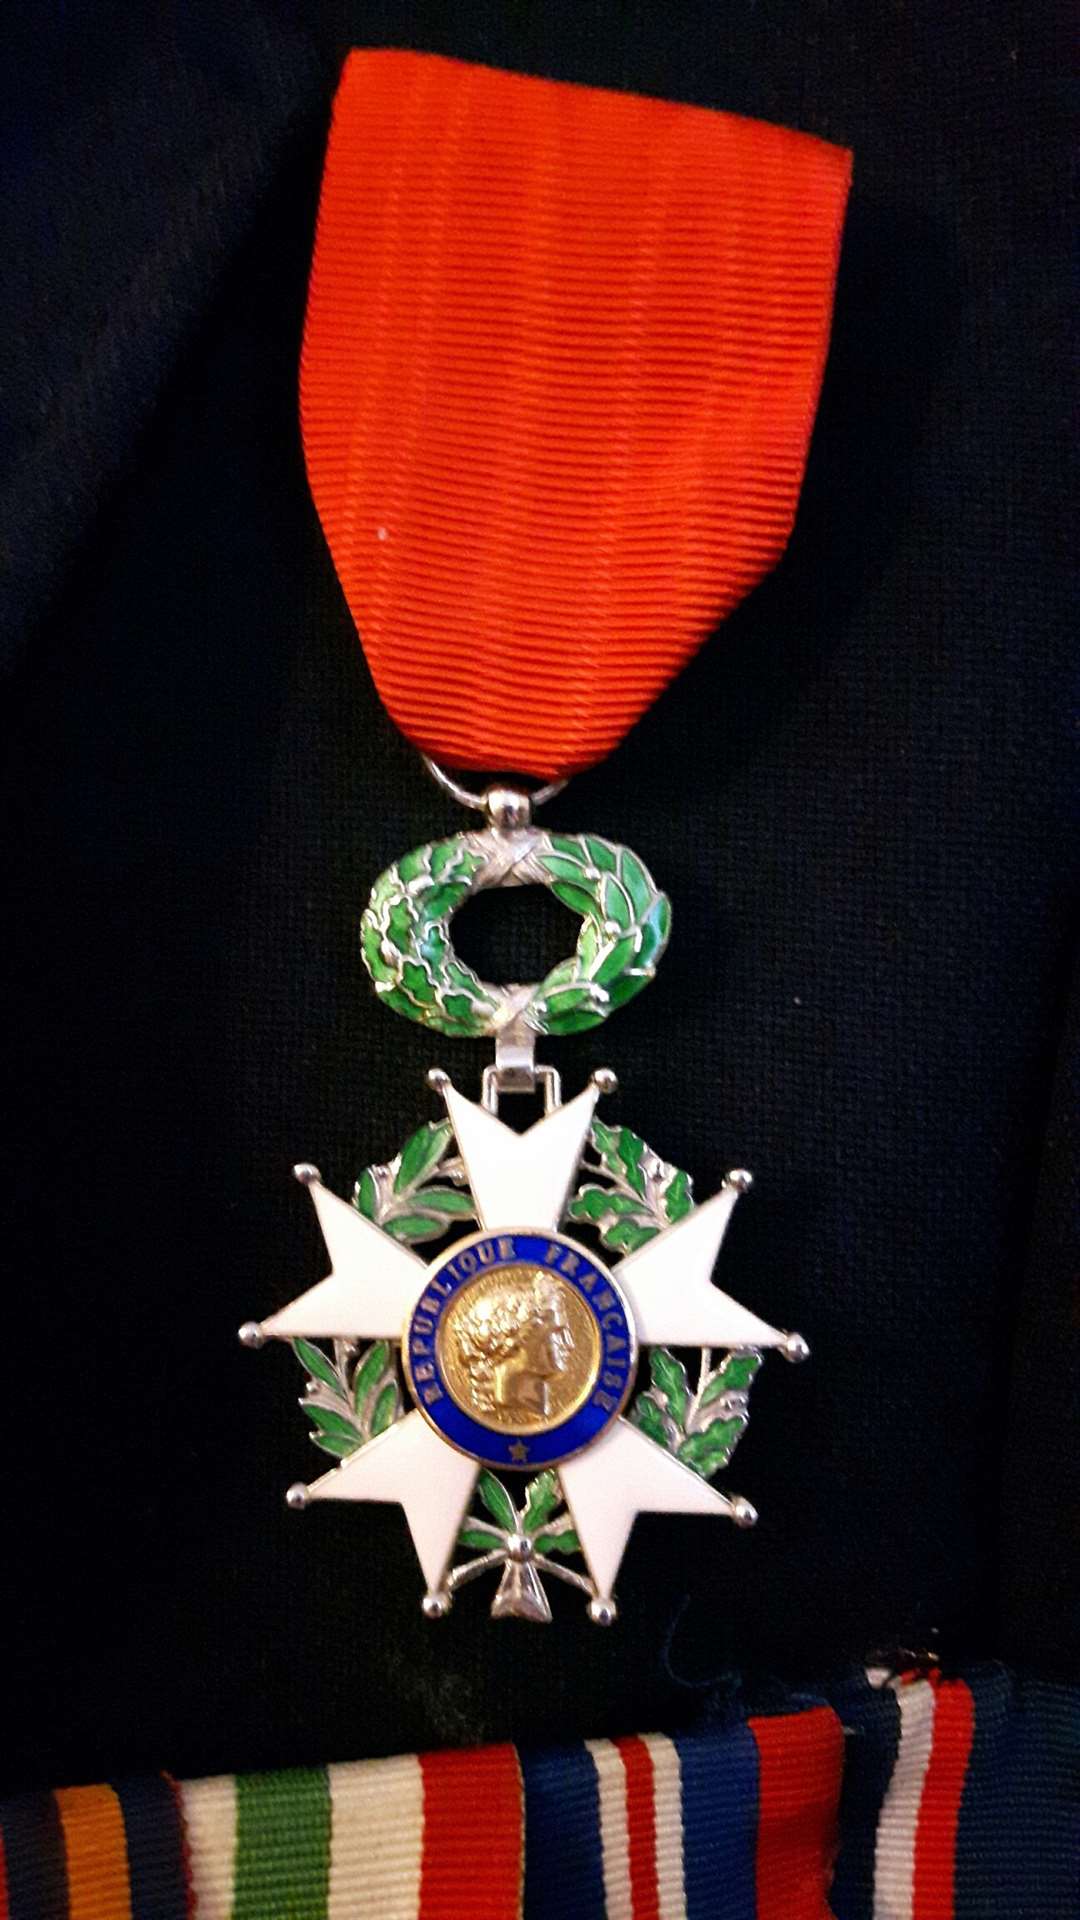 The Legion d'Honneur medal awarded to Cedric Hollands